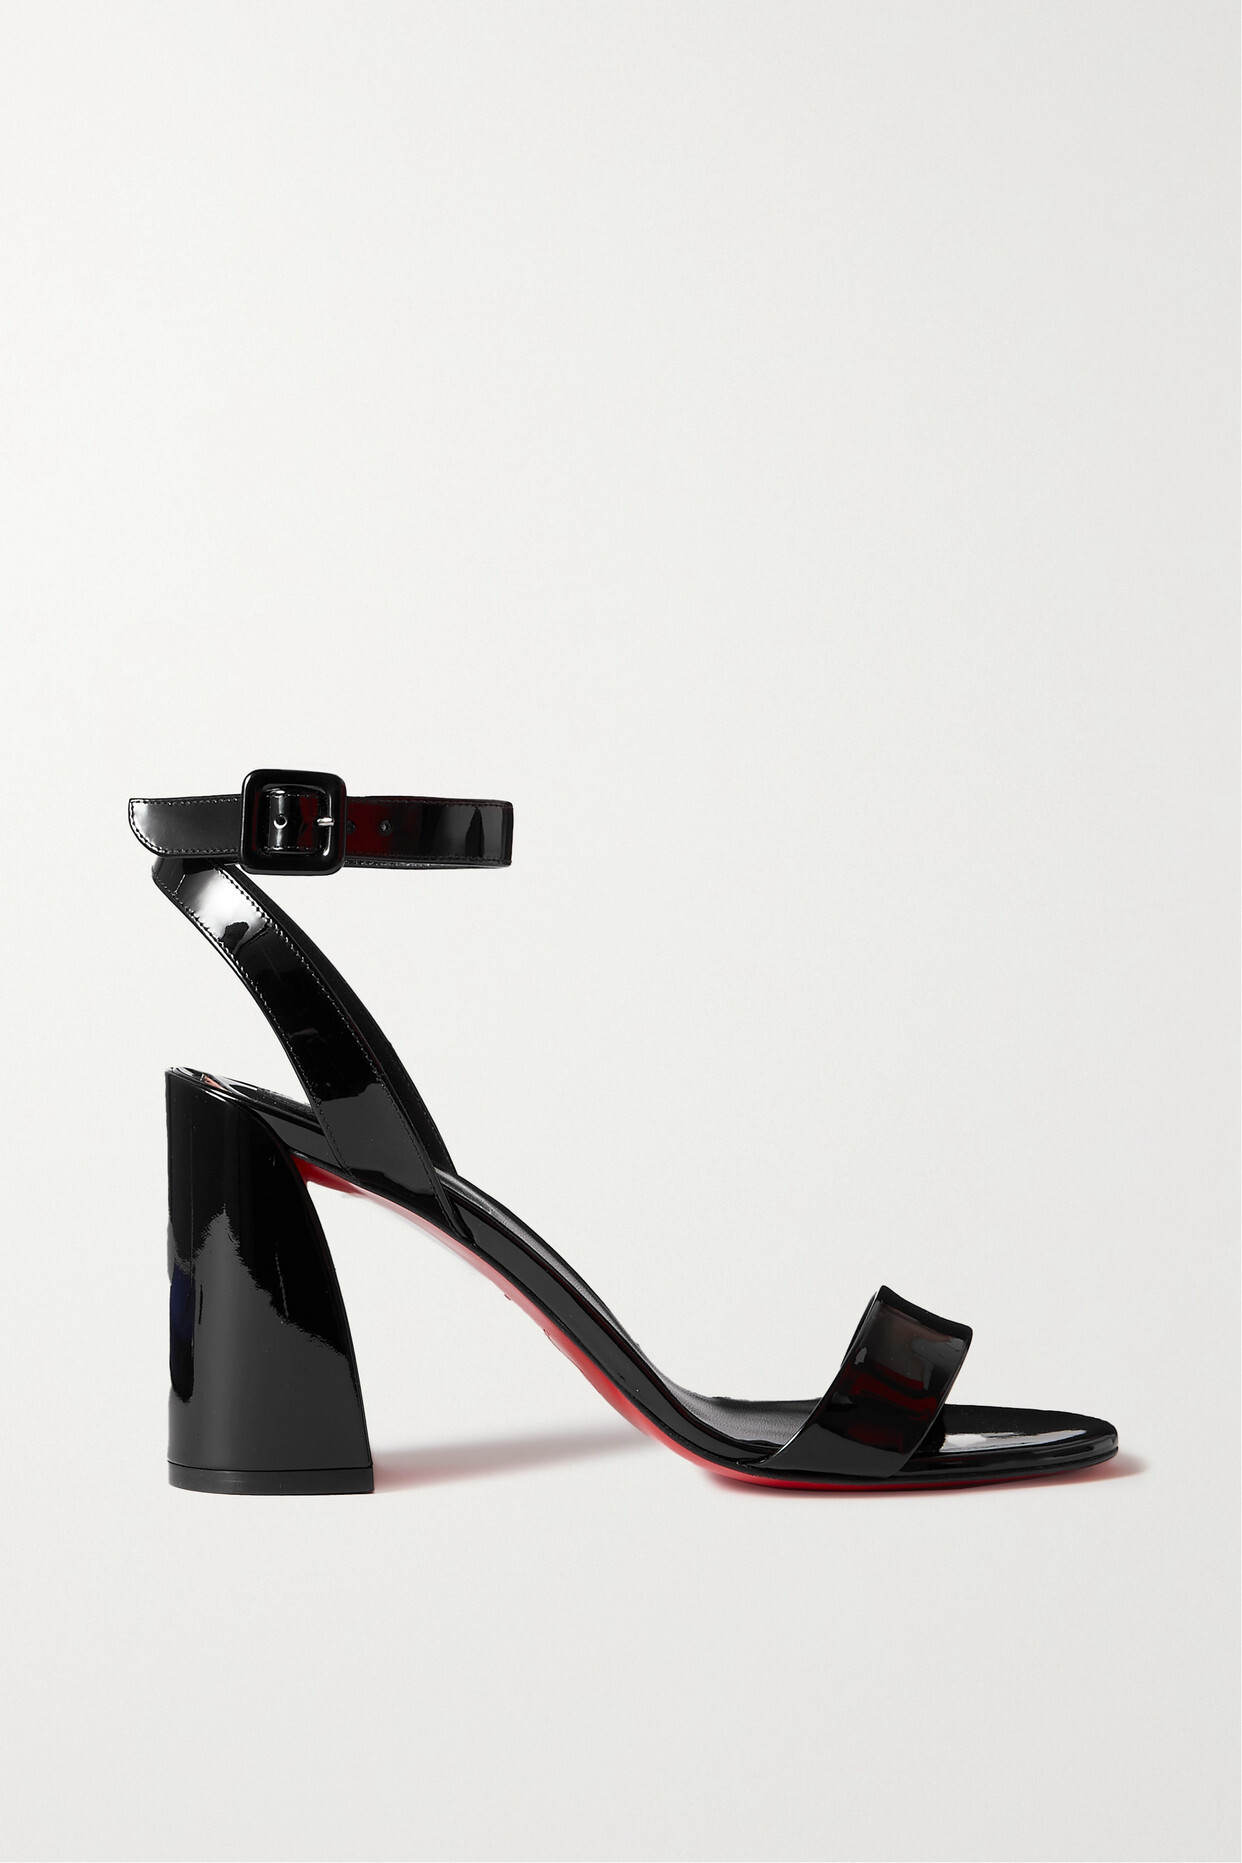 Christian Louboutin - Miss Sabina 85 Patent-leather Sandals - Black